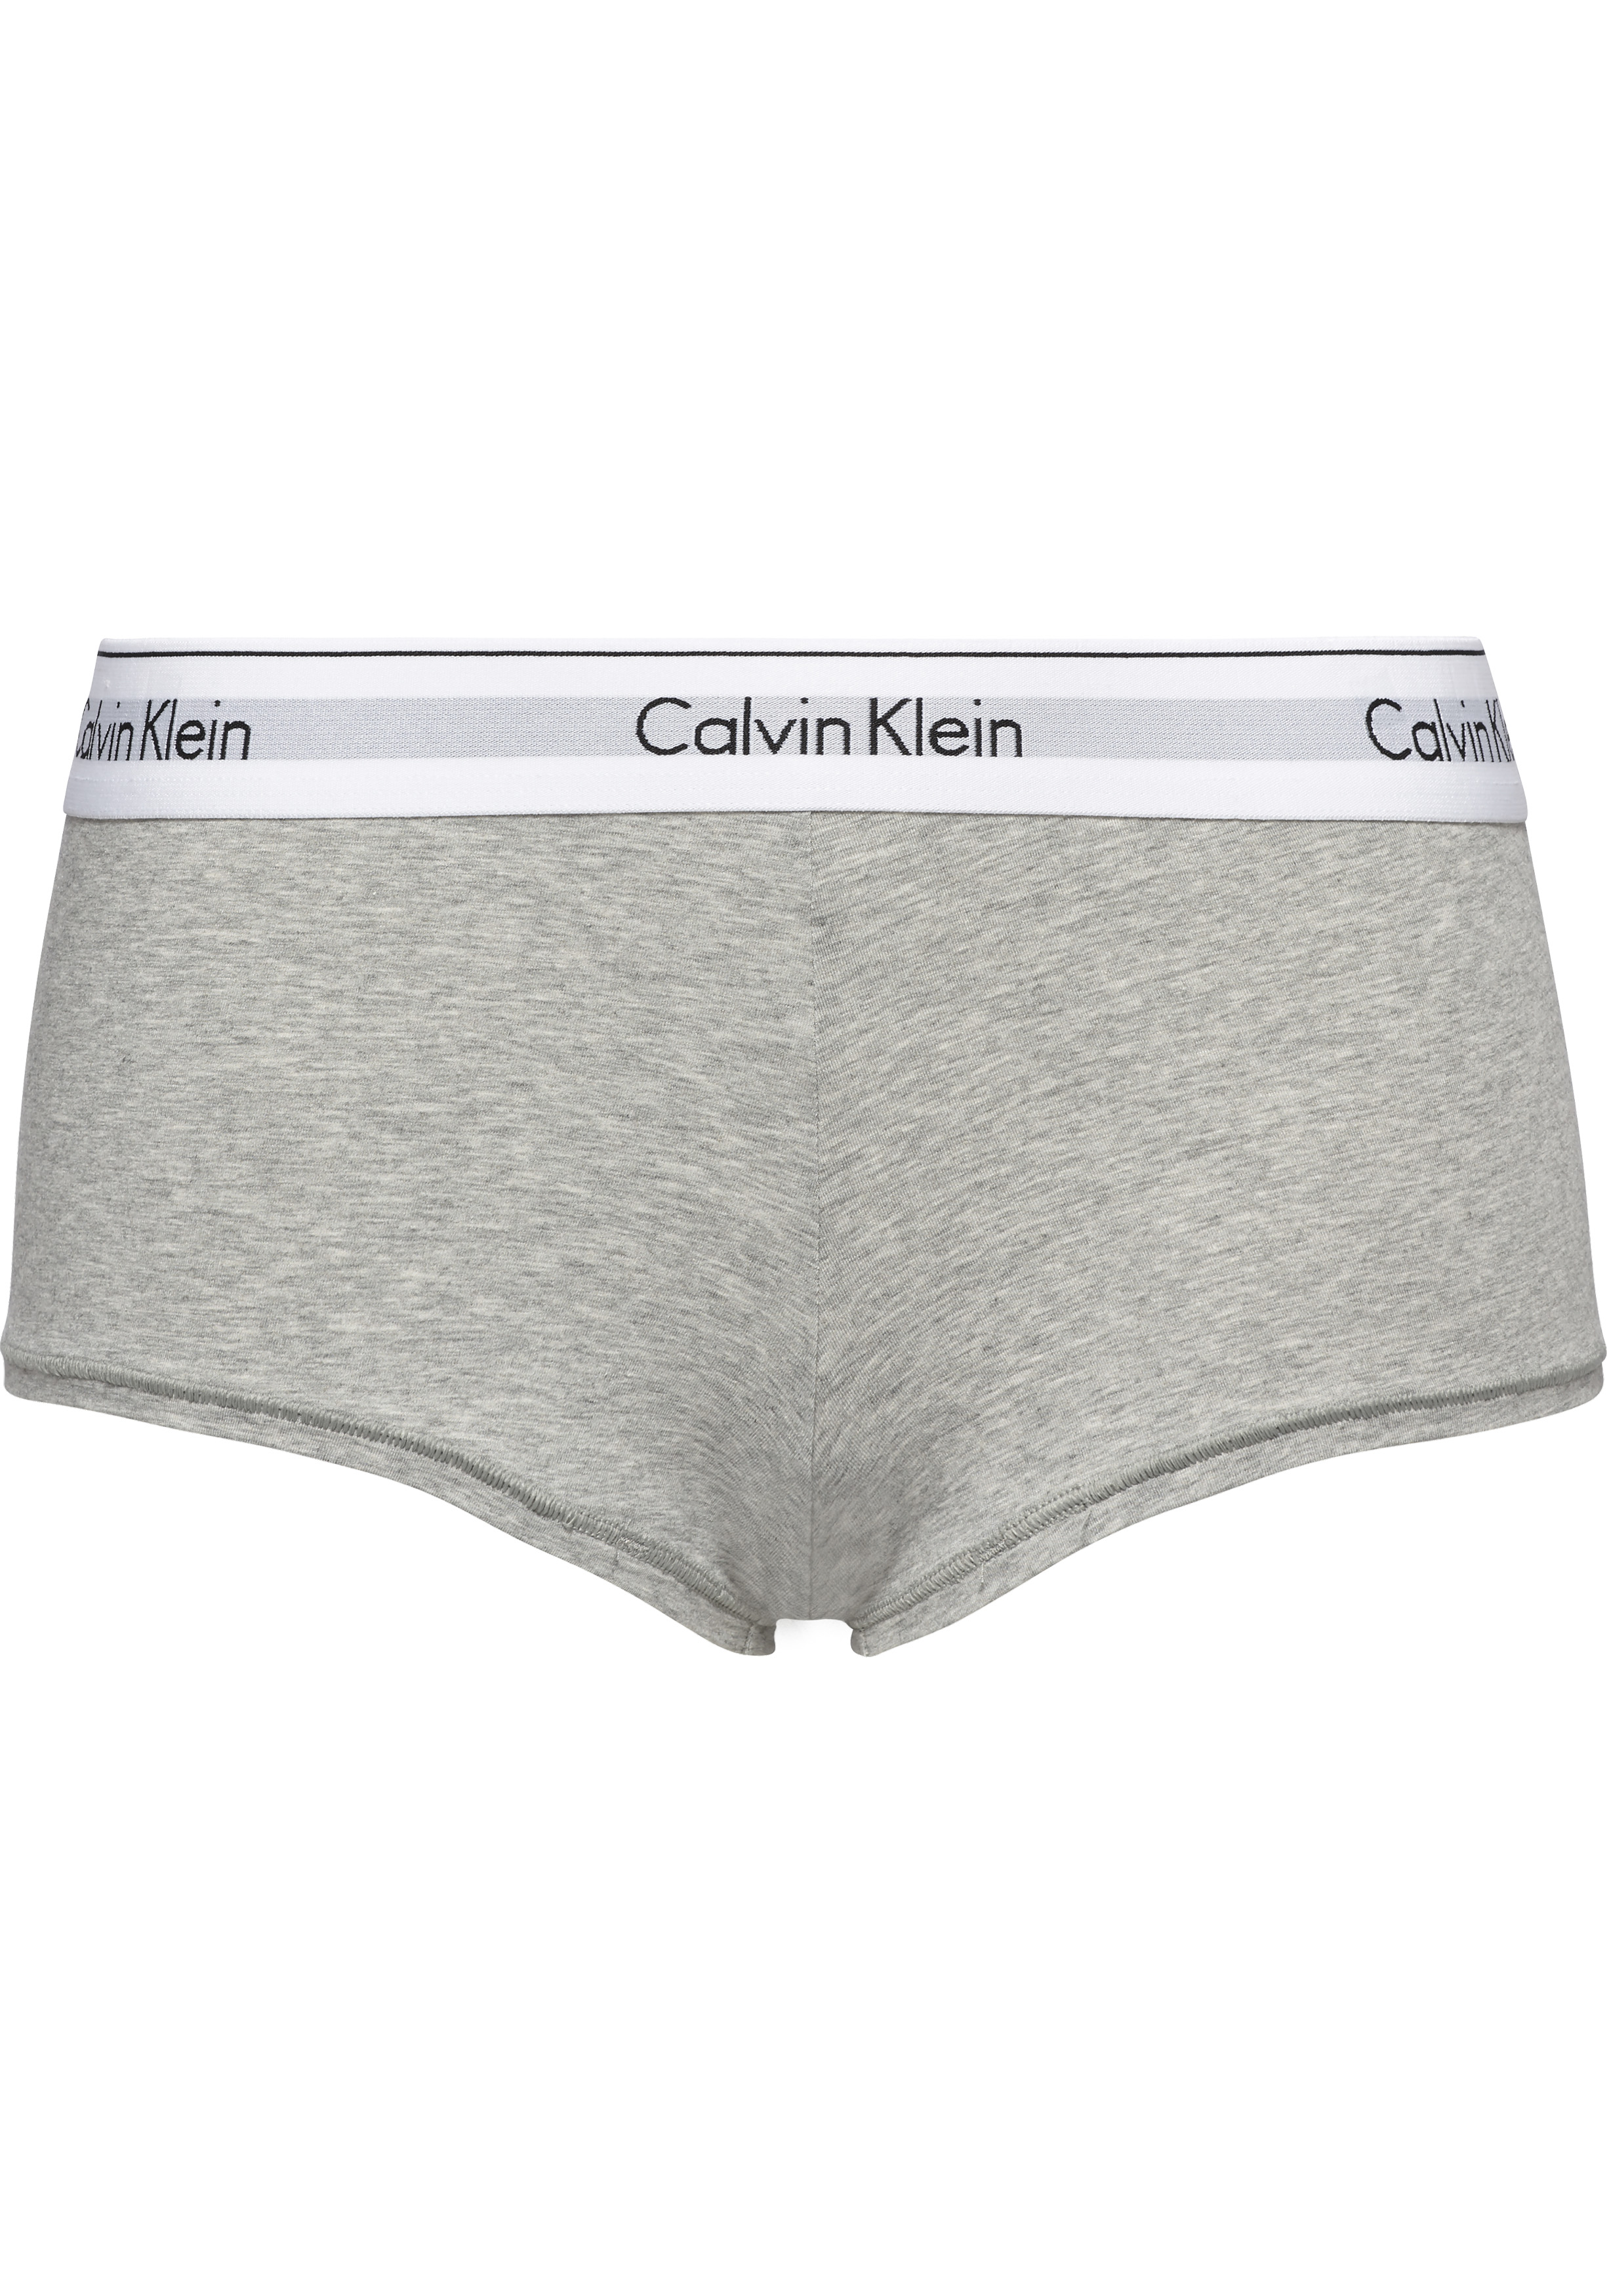 Armstrong condensor positie Calvin Klein dames Modern Cotton hipster slip, boyshort, grijs - Zomer SALE  tot 50% korting